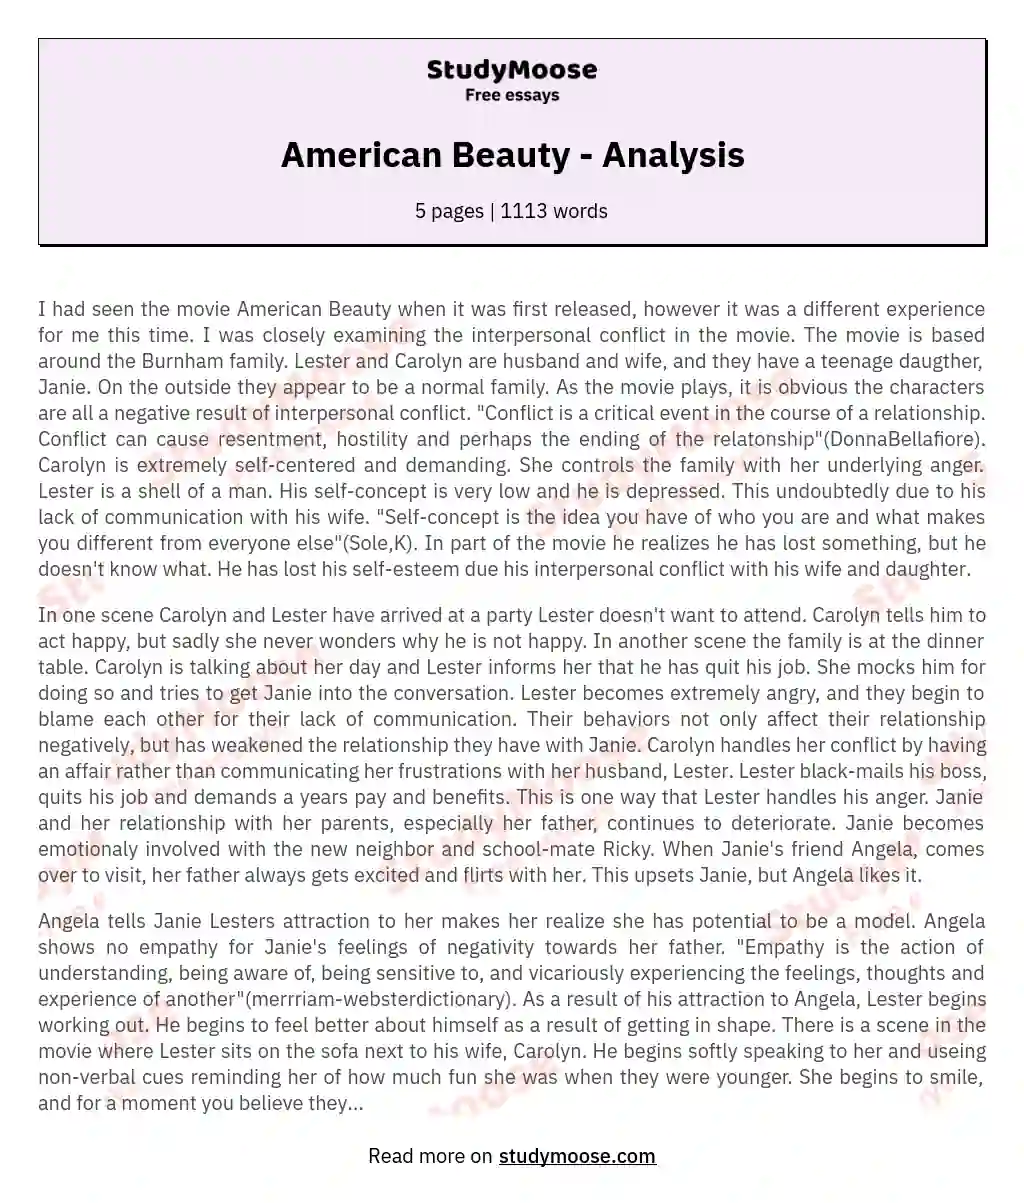 American Beauty - Analysis essay